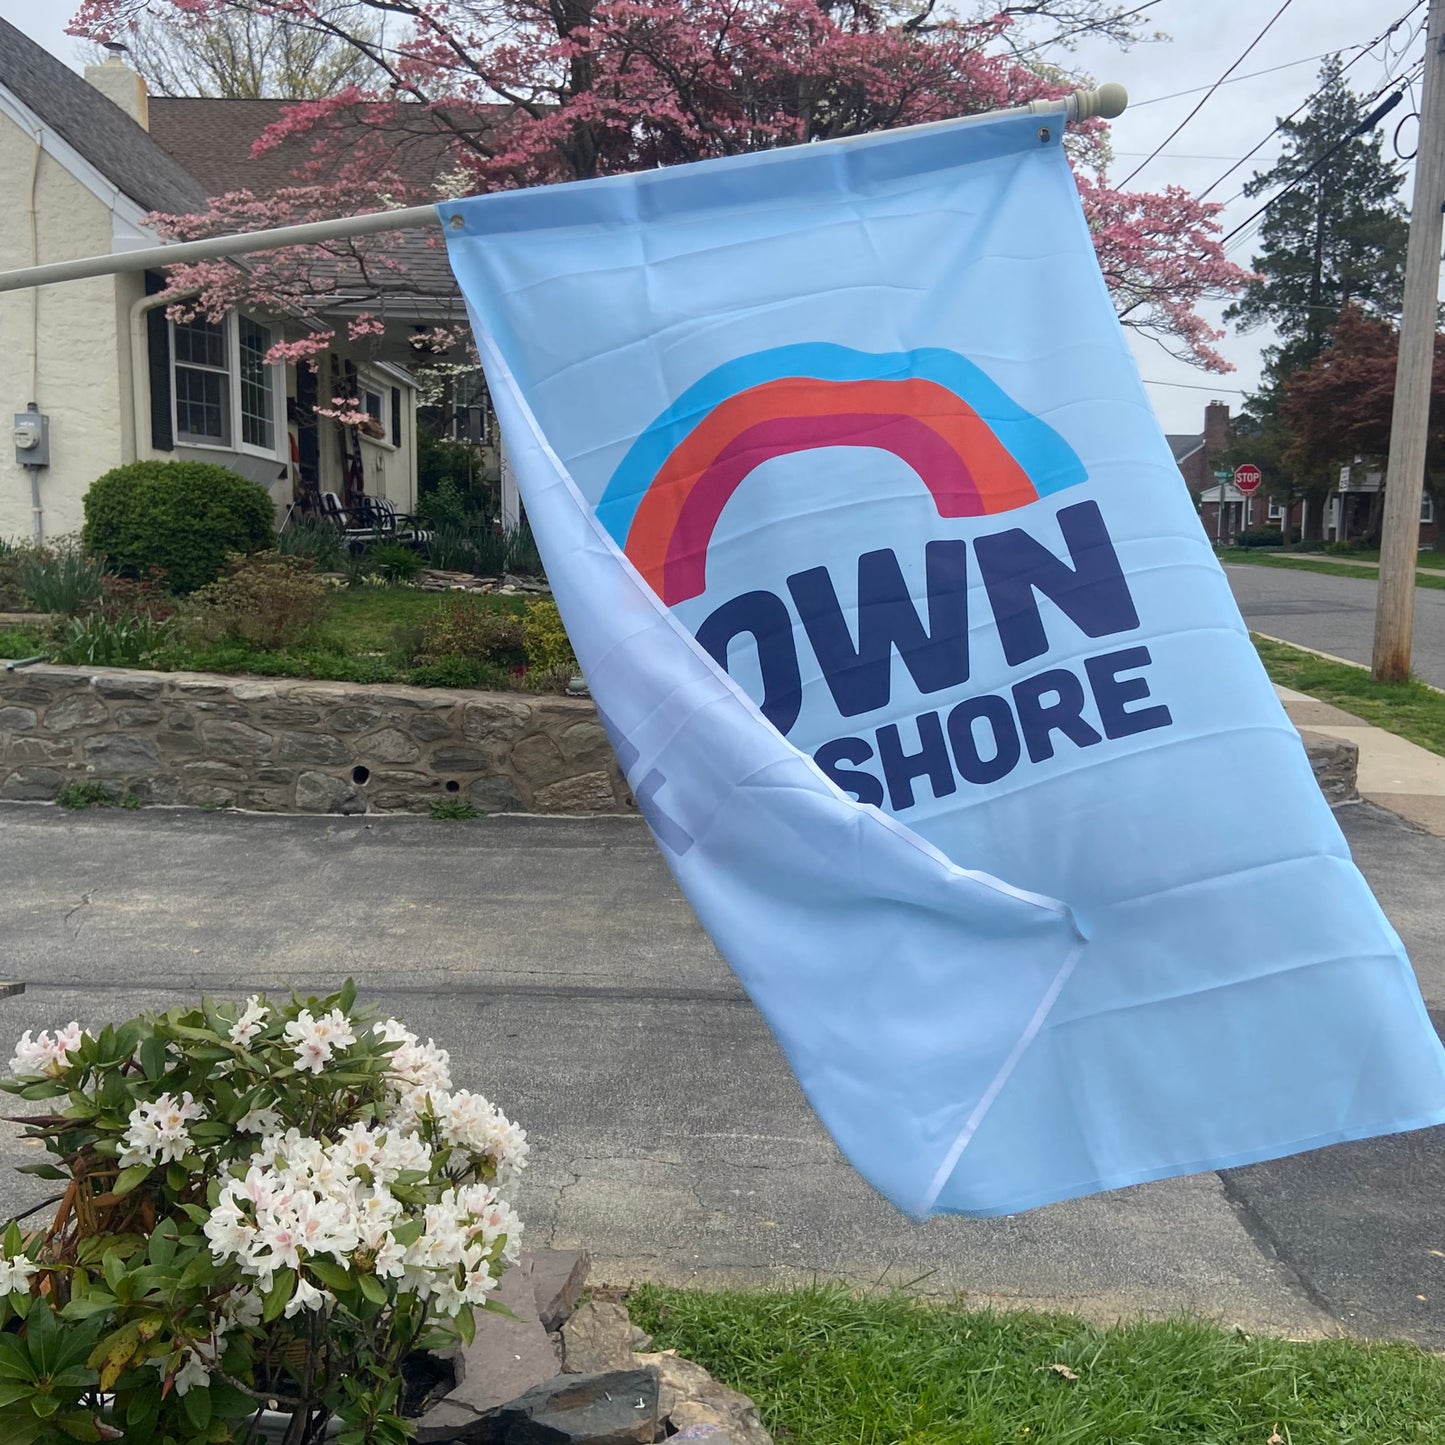 Down The Shore Rainbow Flag